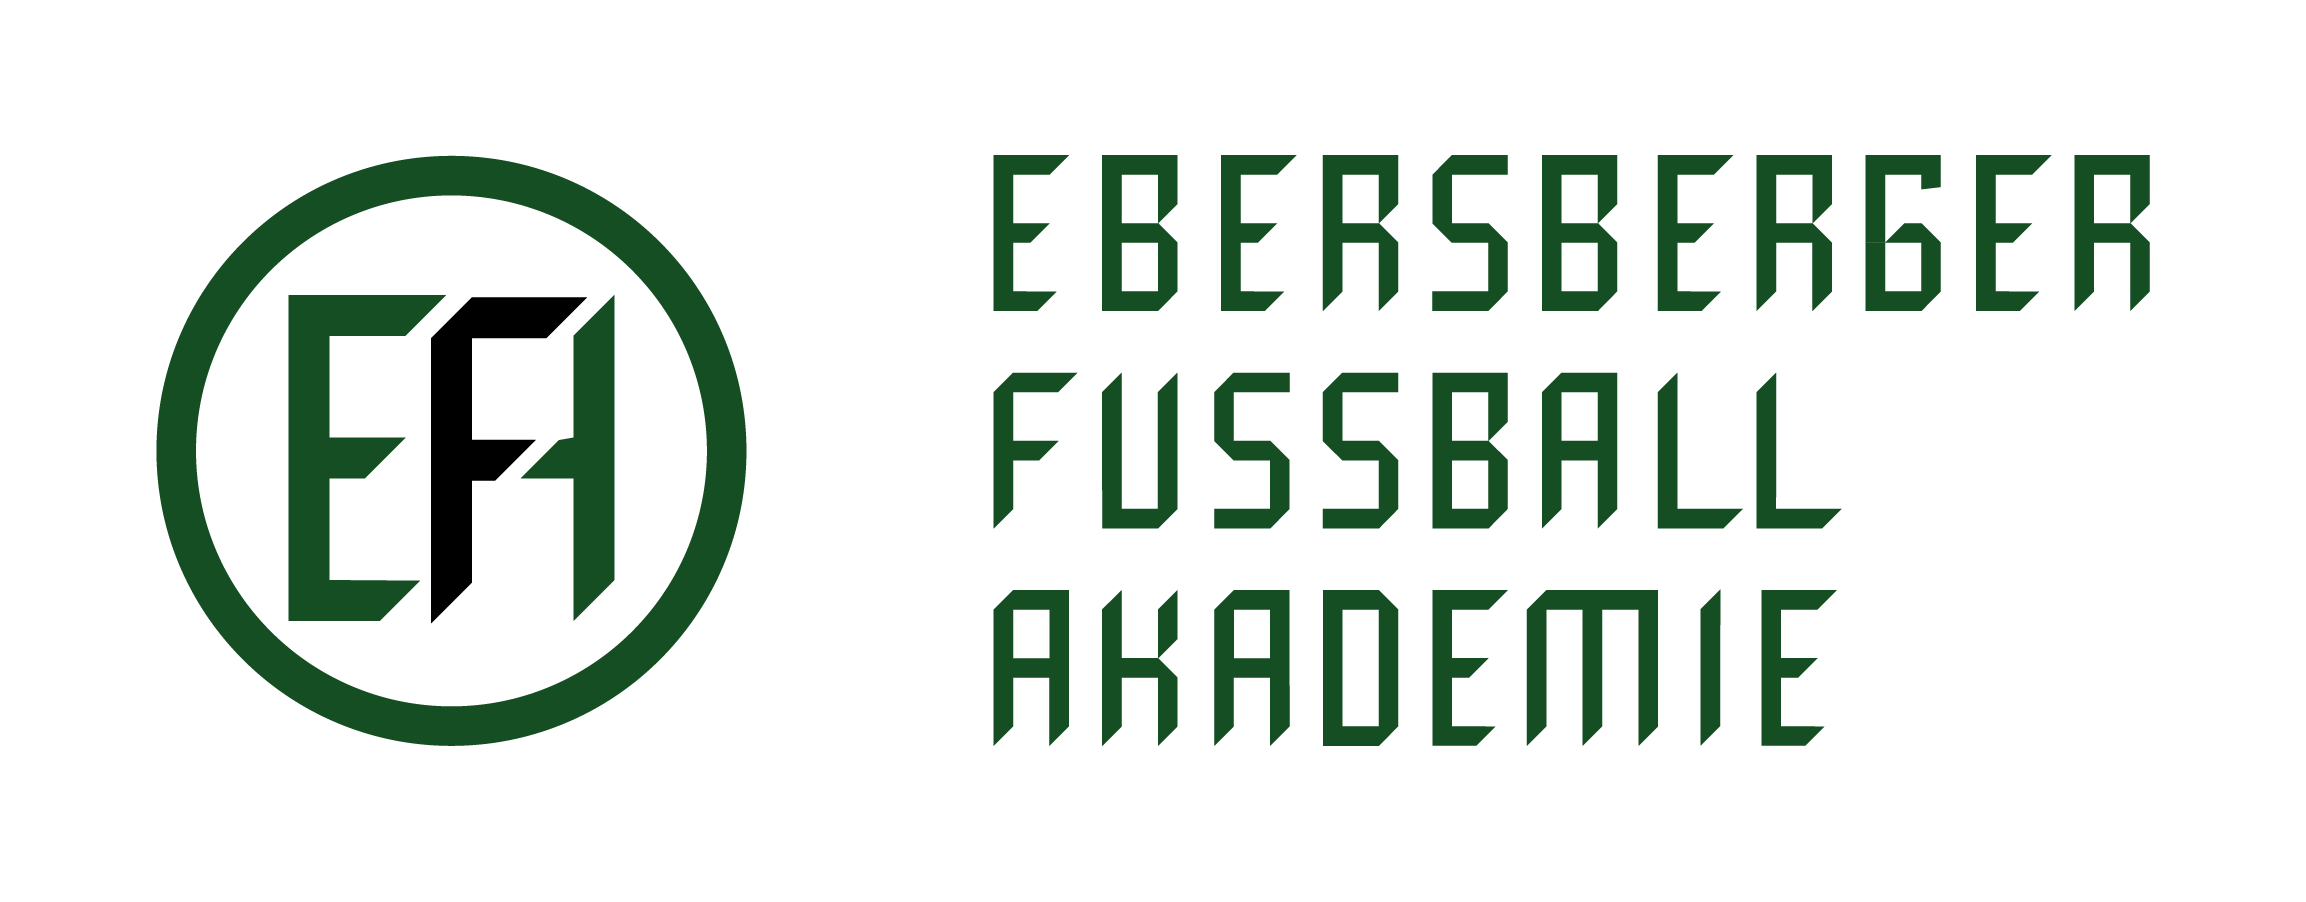 Ebersberger Fussballakademie